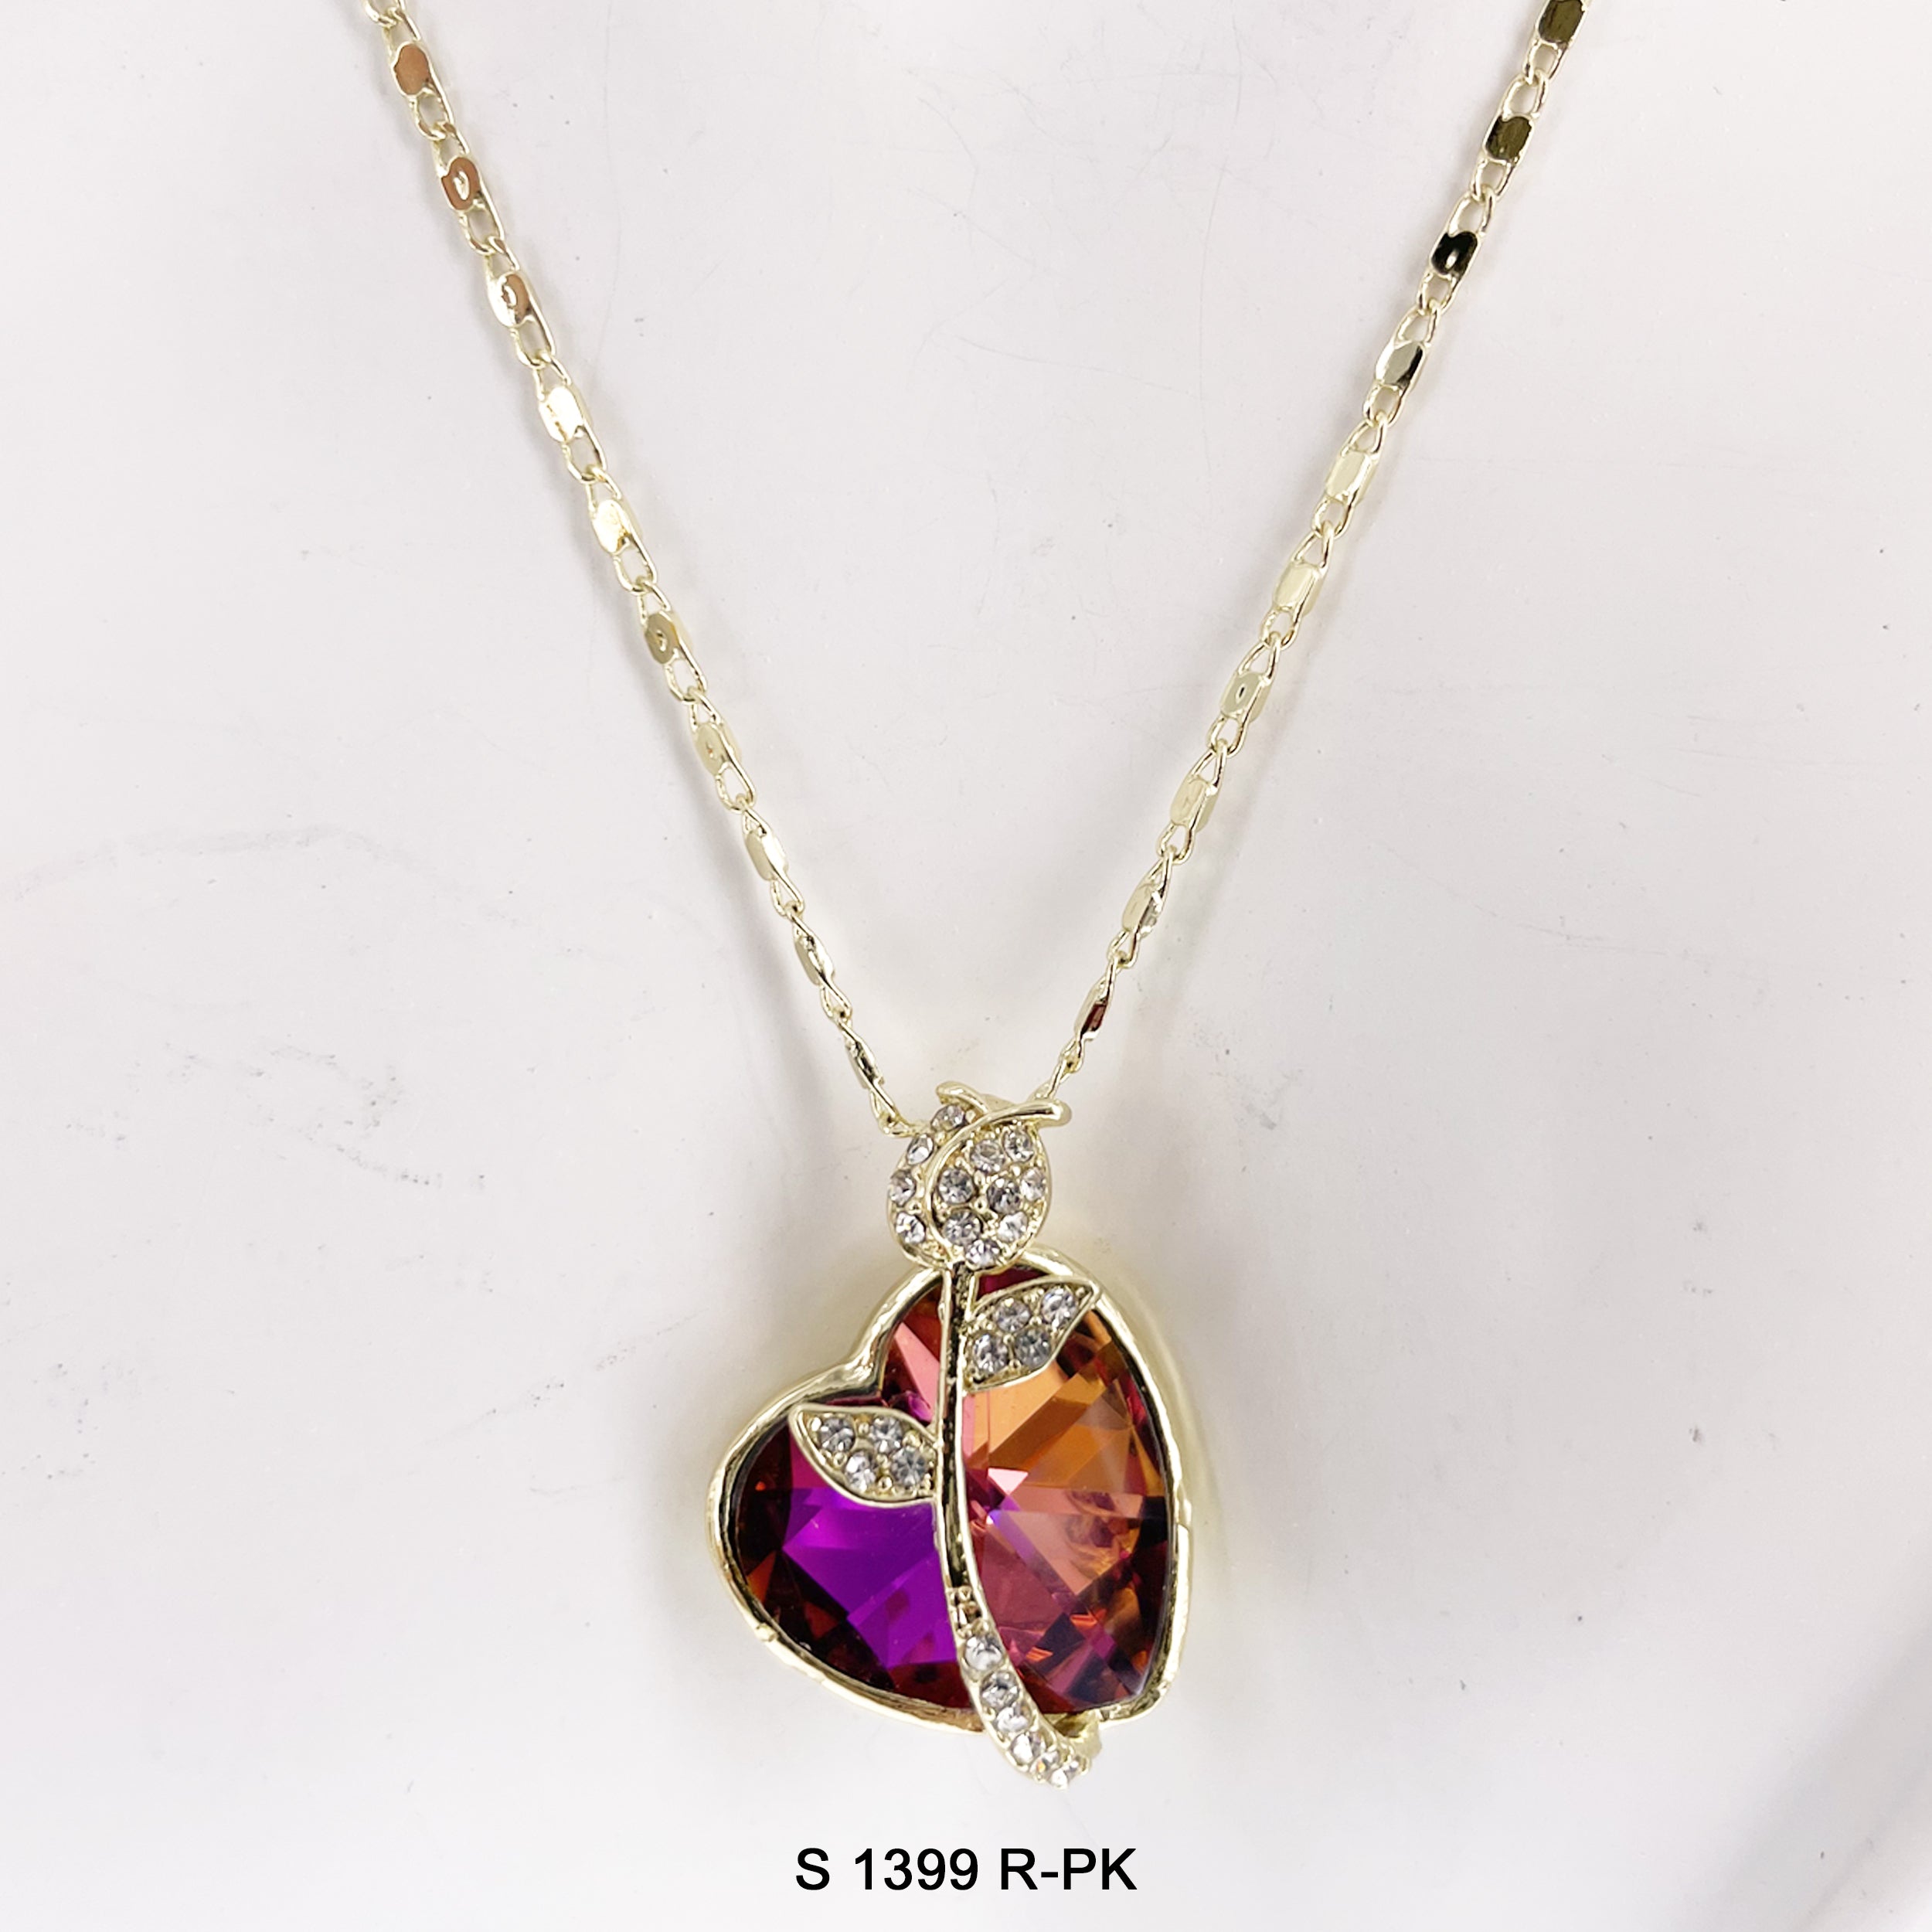 Rose On Heart Pendant Necklace Set S 1399 R-PK